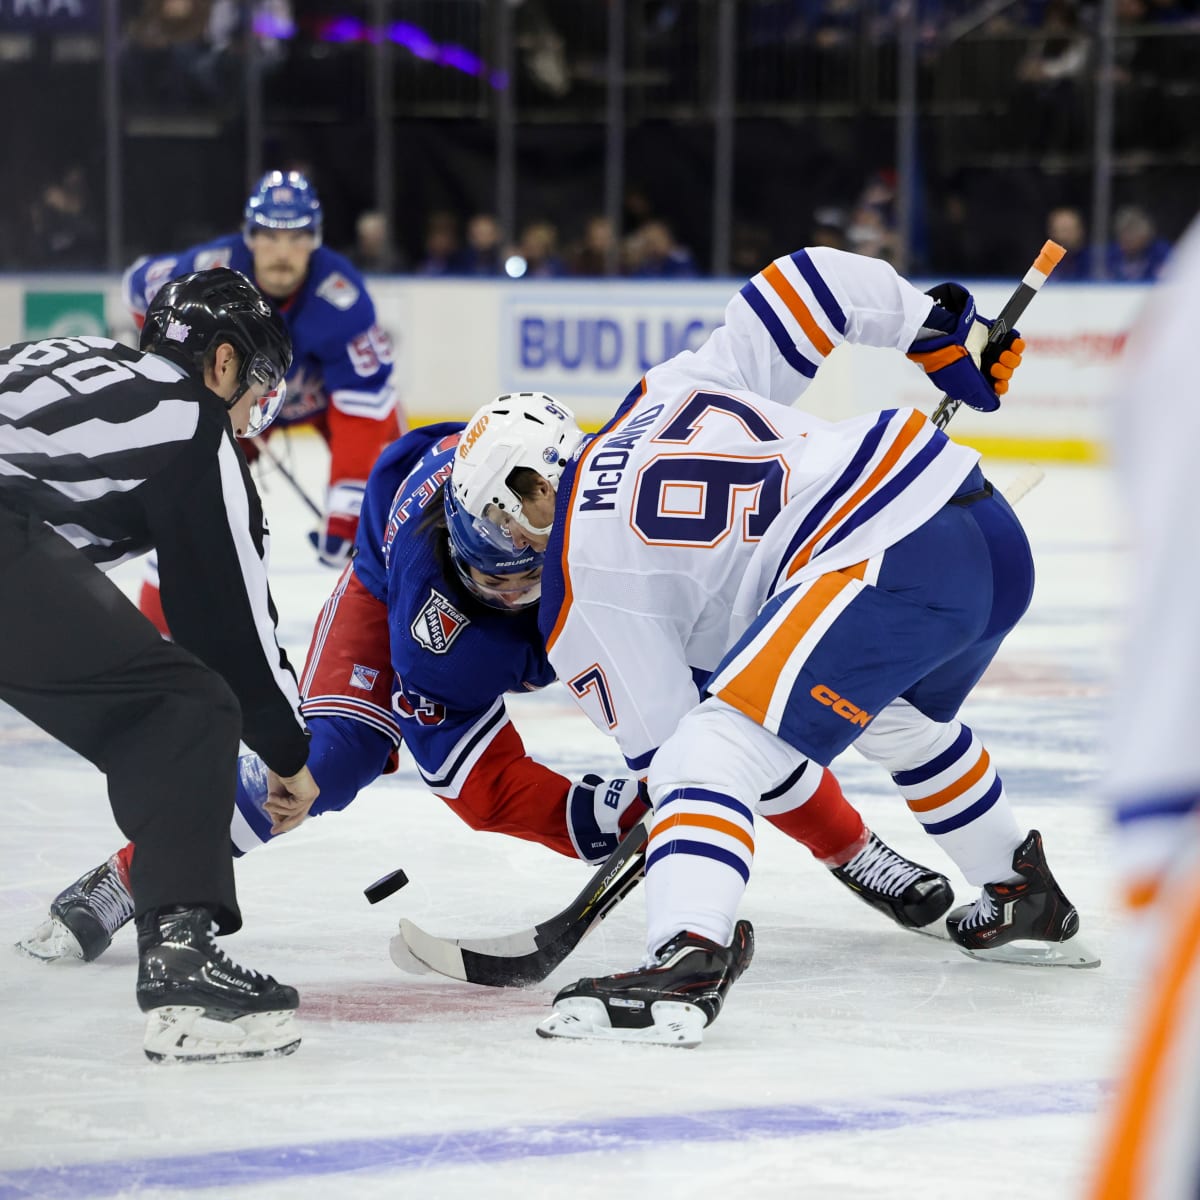 Canadian ice hockey player Brad Park of the New York Rangers skates